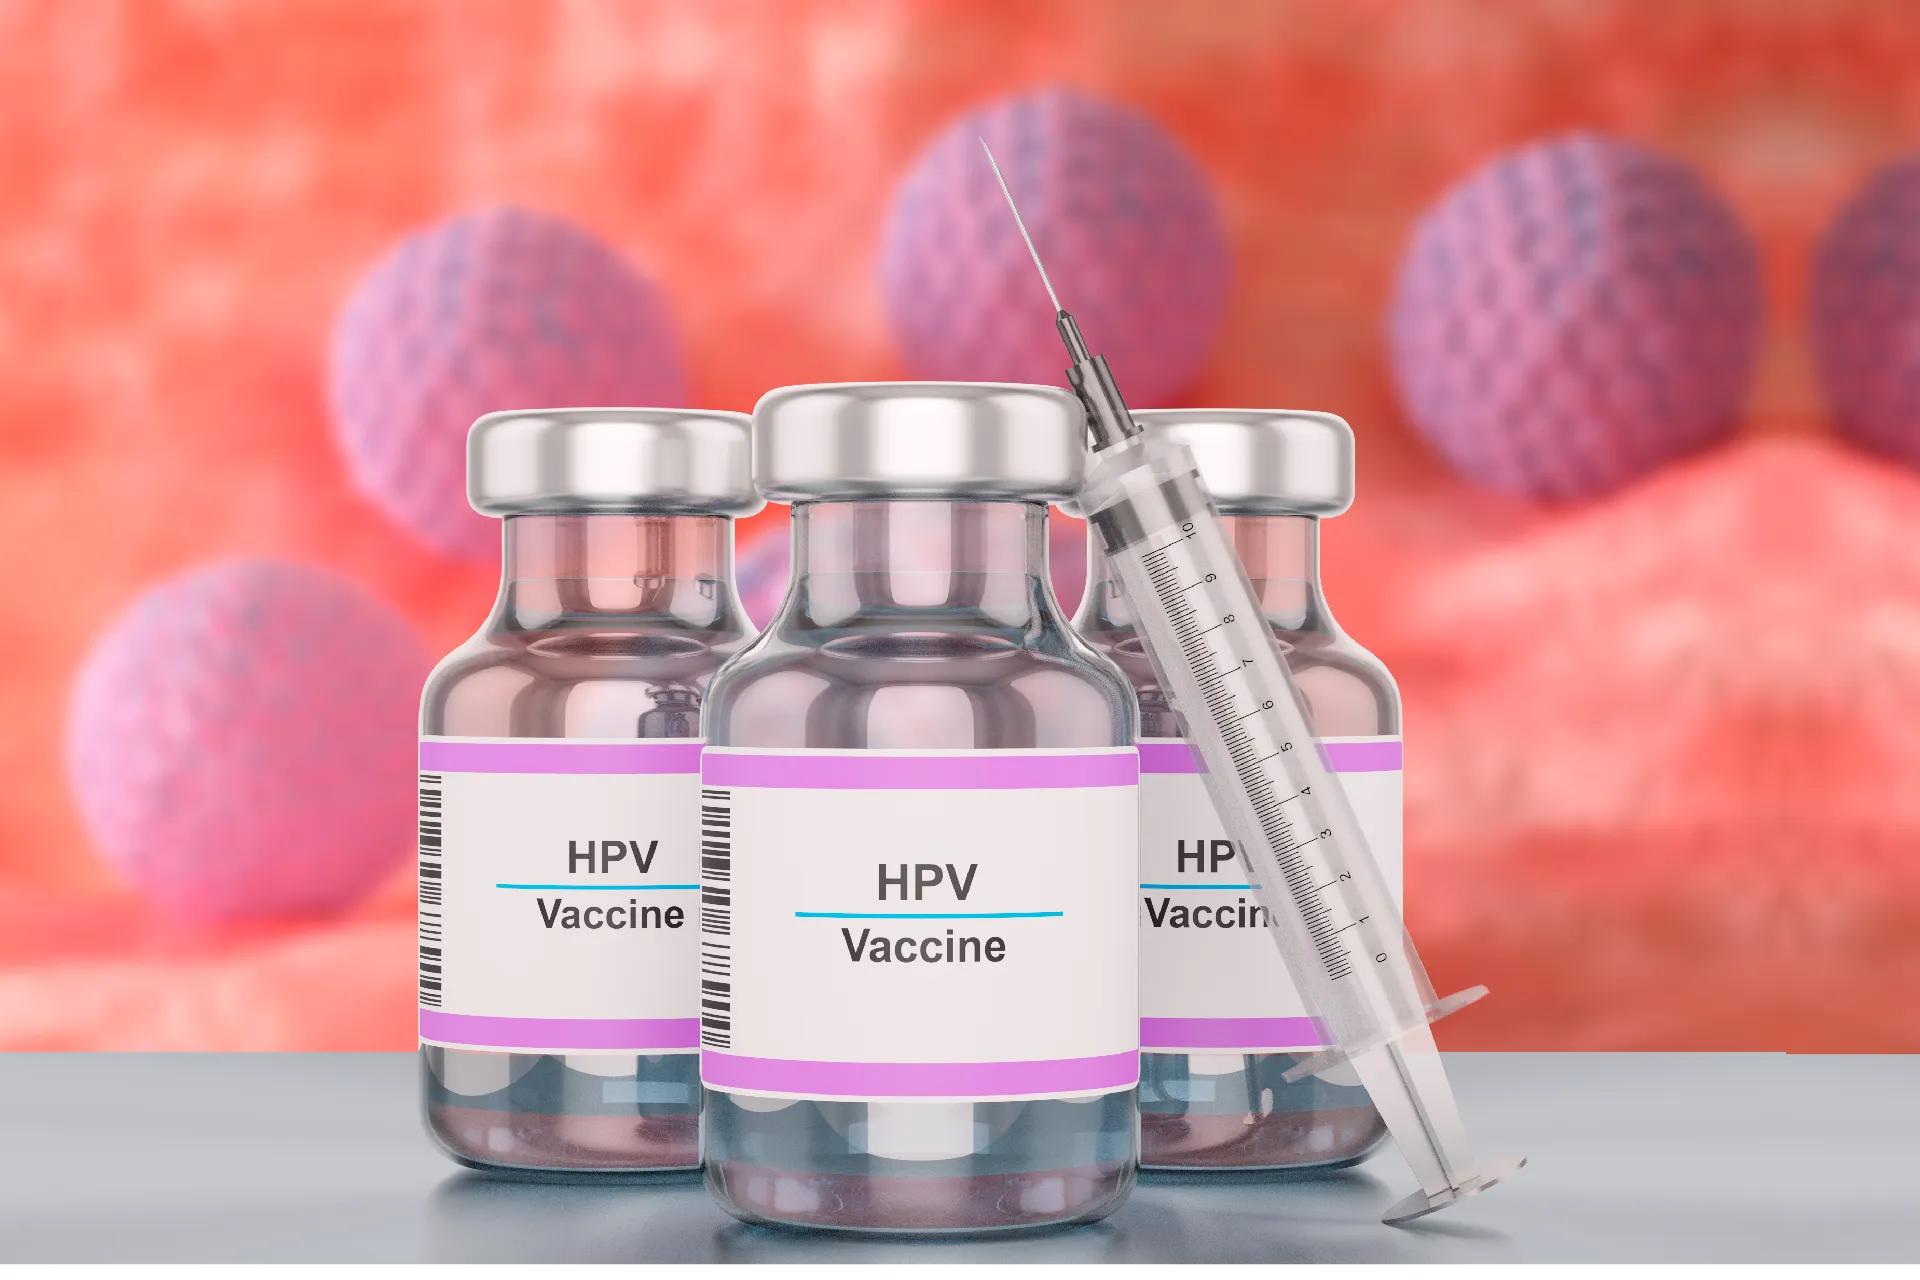 HPV தடுப்பூசிகள்: பயன்பாடுகள், அளவுகள், தடுப்பூசி இயக்கம் மற்றும் முக்கியத்துவம்